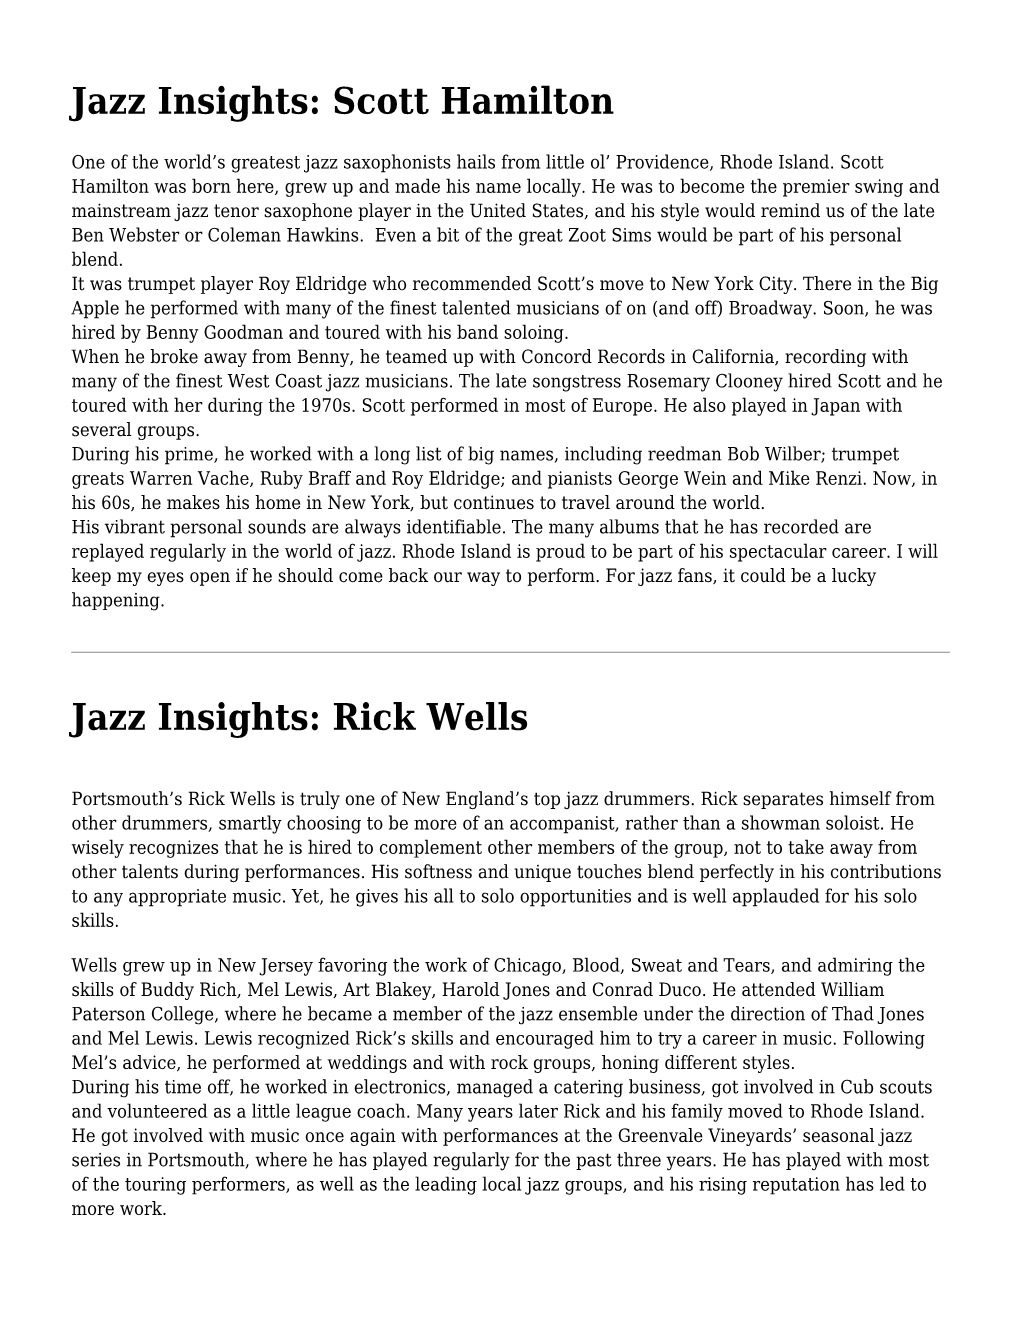 Jazz Insights: David Zinno,Jazz Insights: Barbara Slater,Jazz